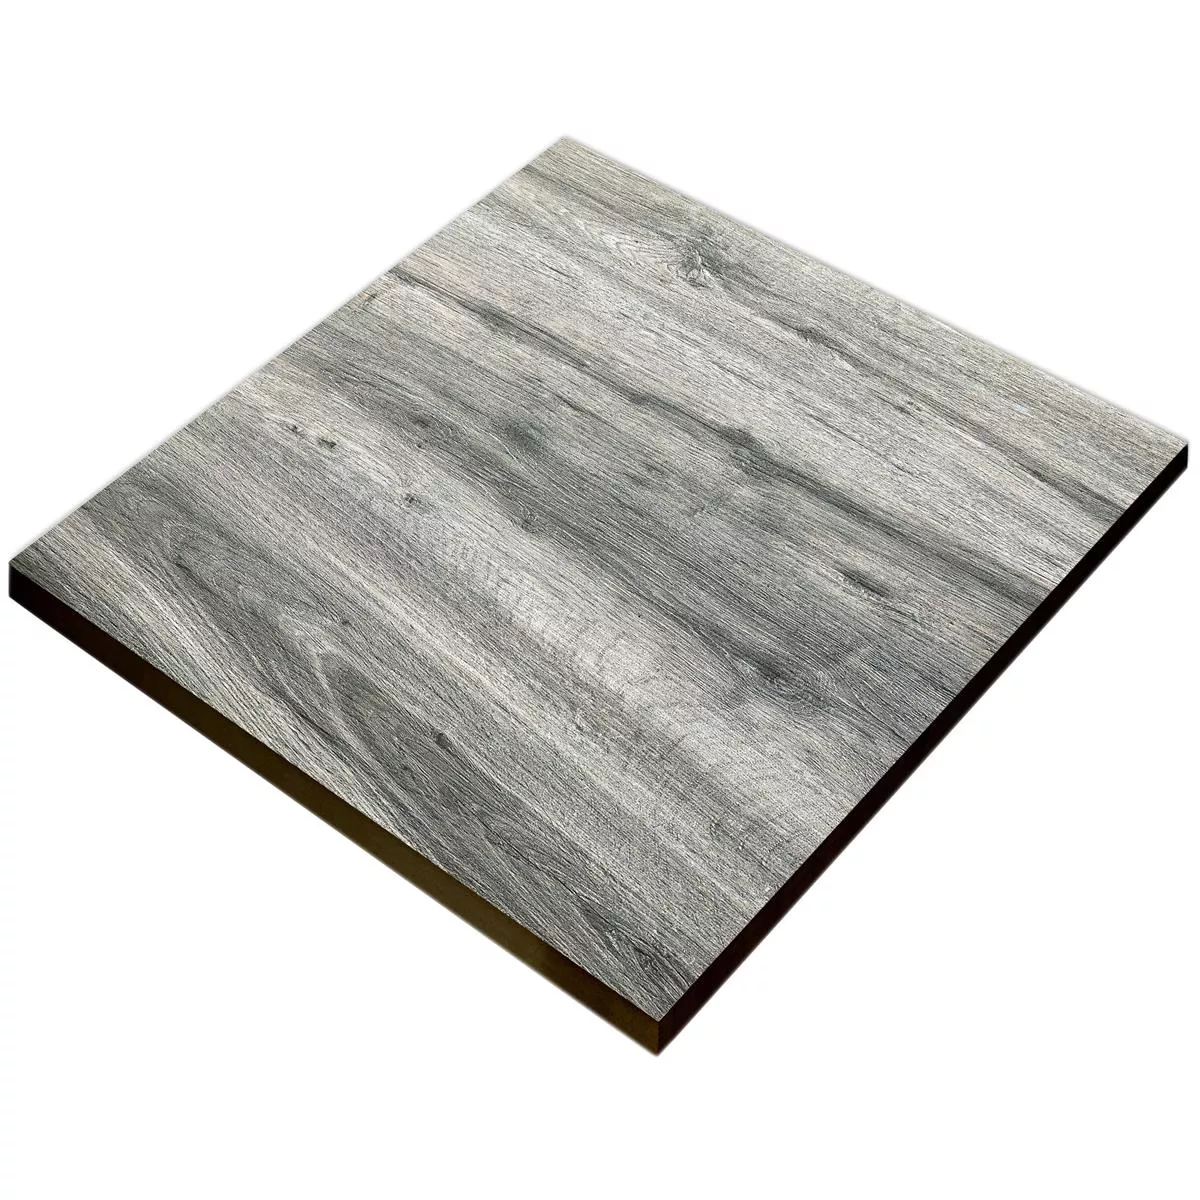 Terrastegels Starwood Houtlook Grey 60x60cm